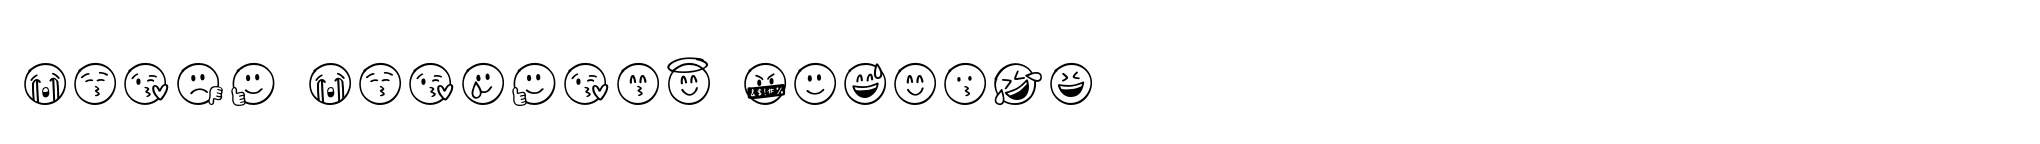 Emoji Emotions Regular image